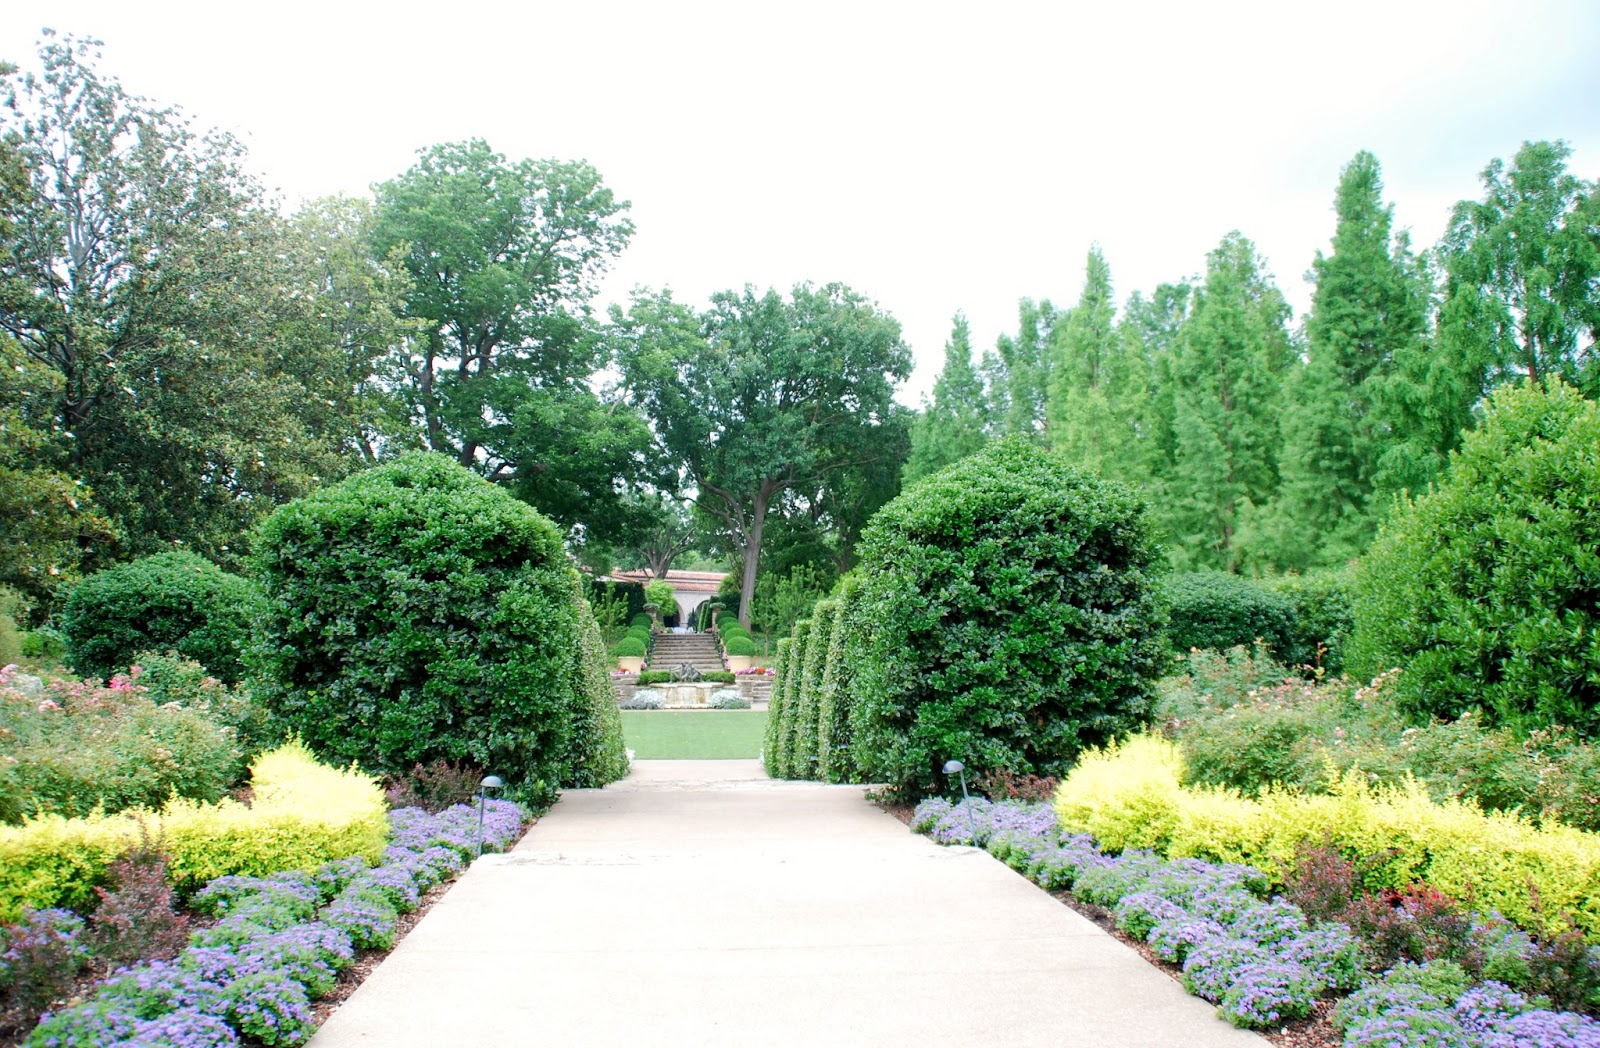 mare's blog: Dallas Arboretum: A pictorial